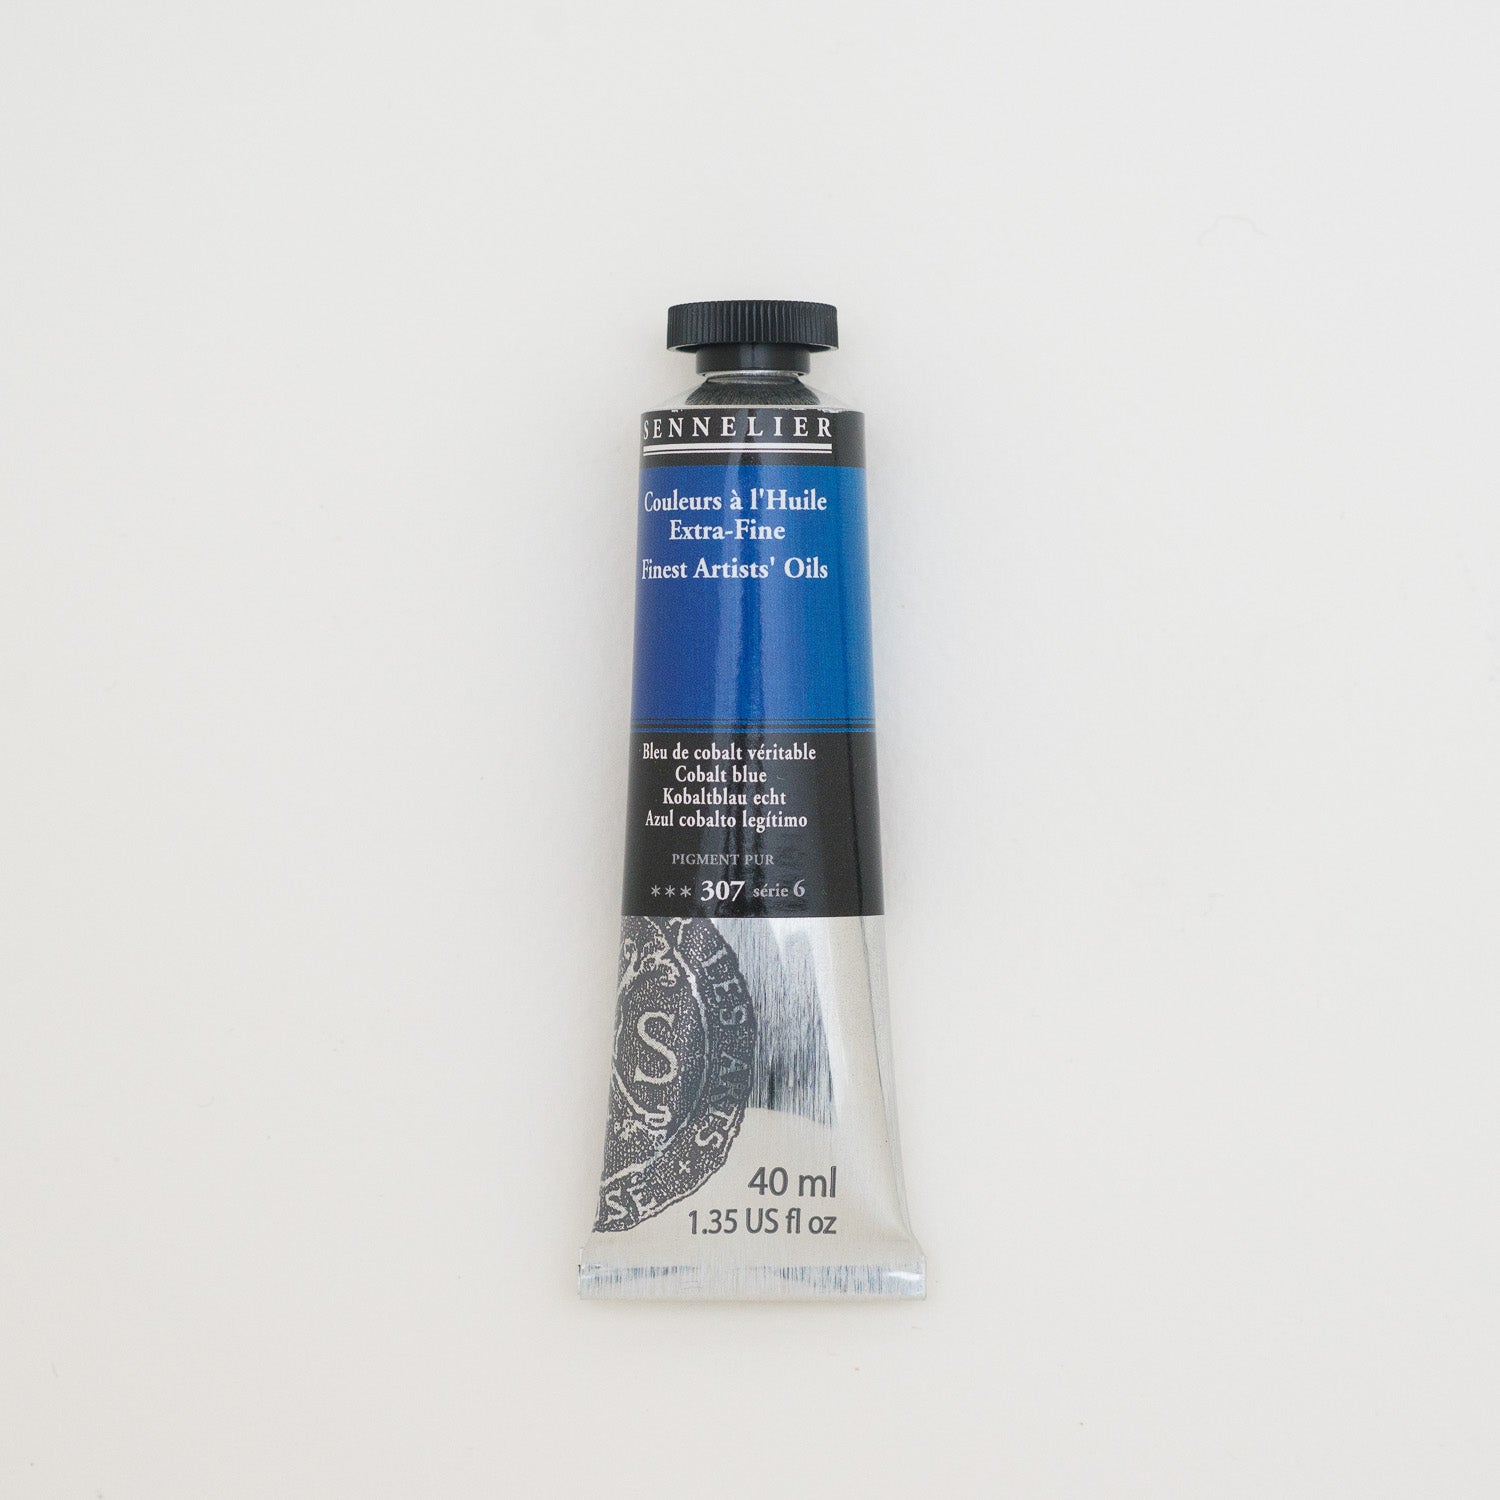 Sennelier Oil Paint 40ml - Series 6 - Melbourne Etching Supplies